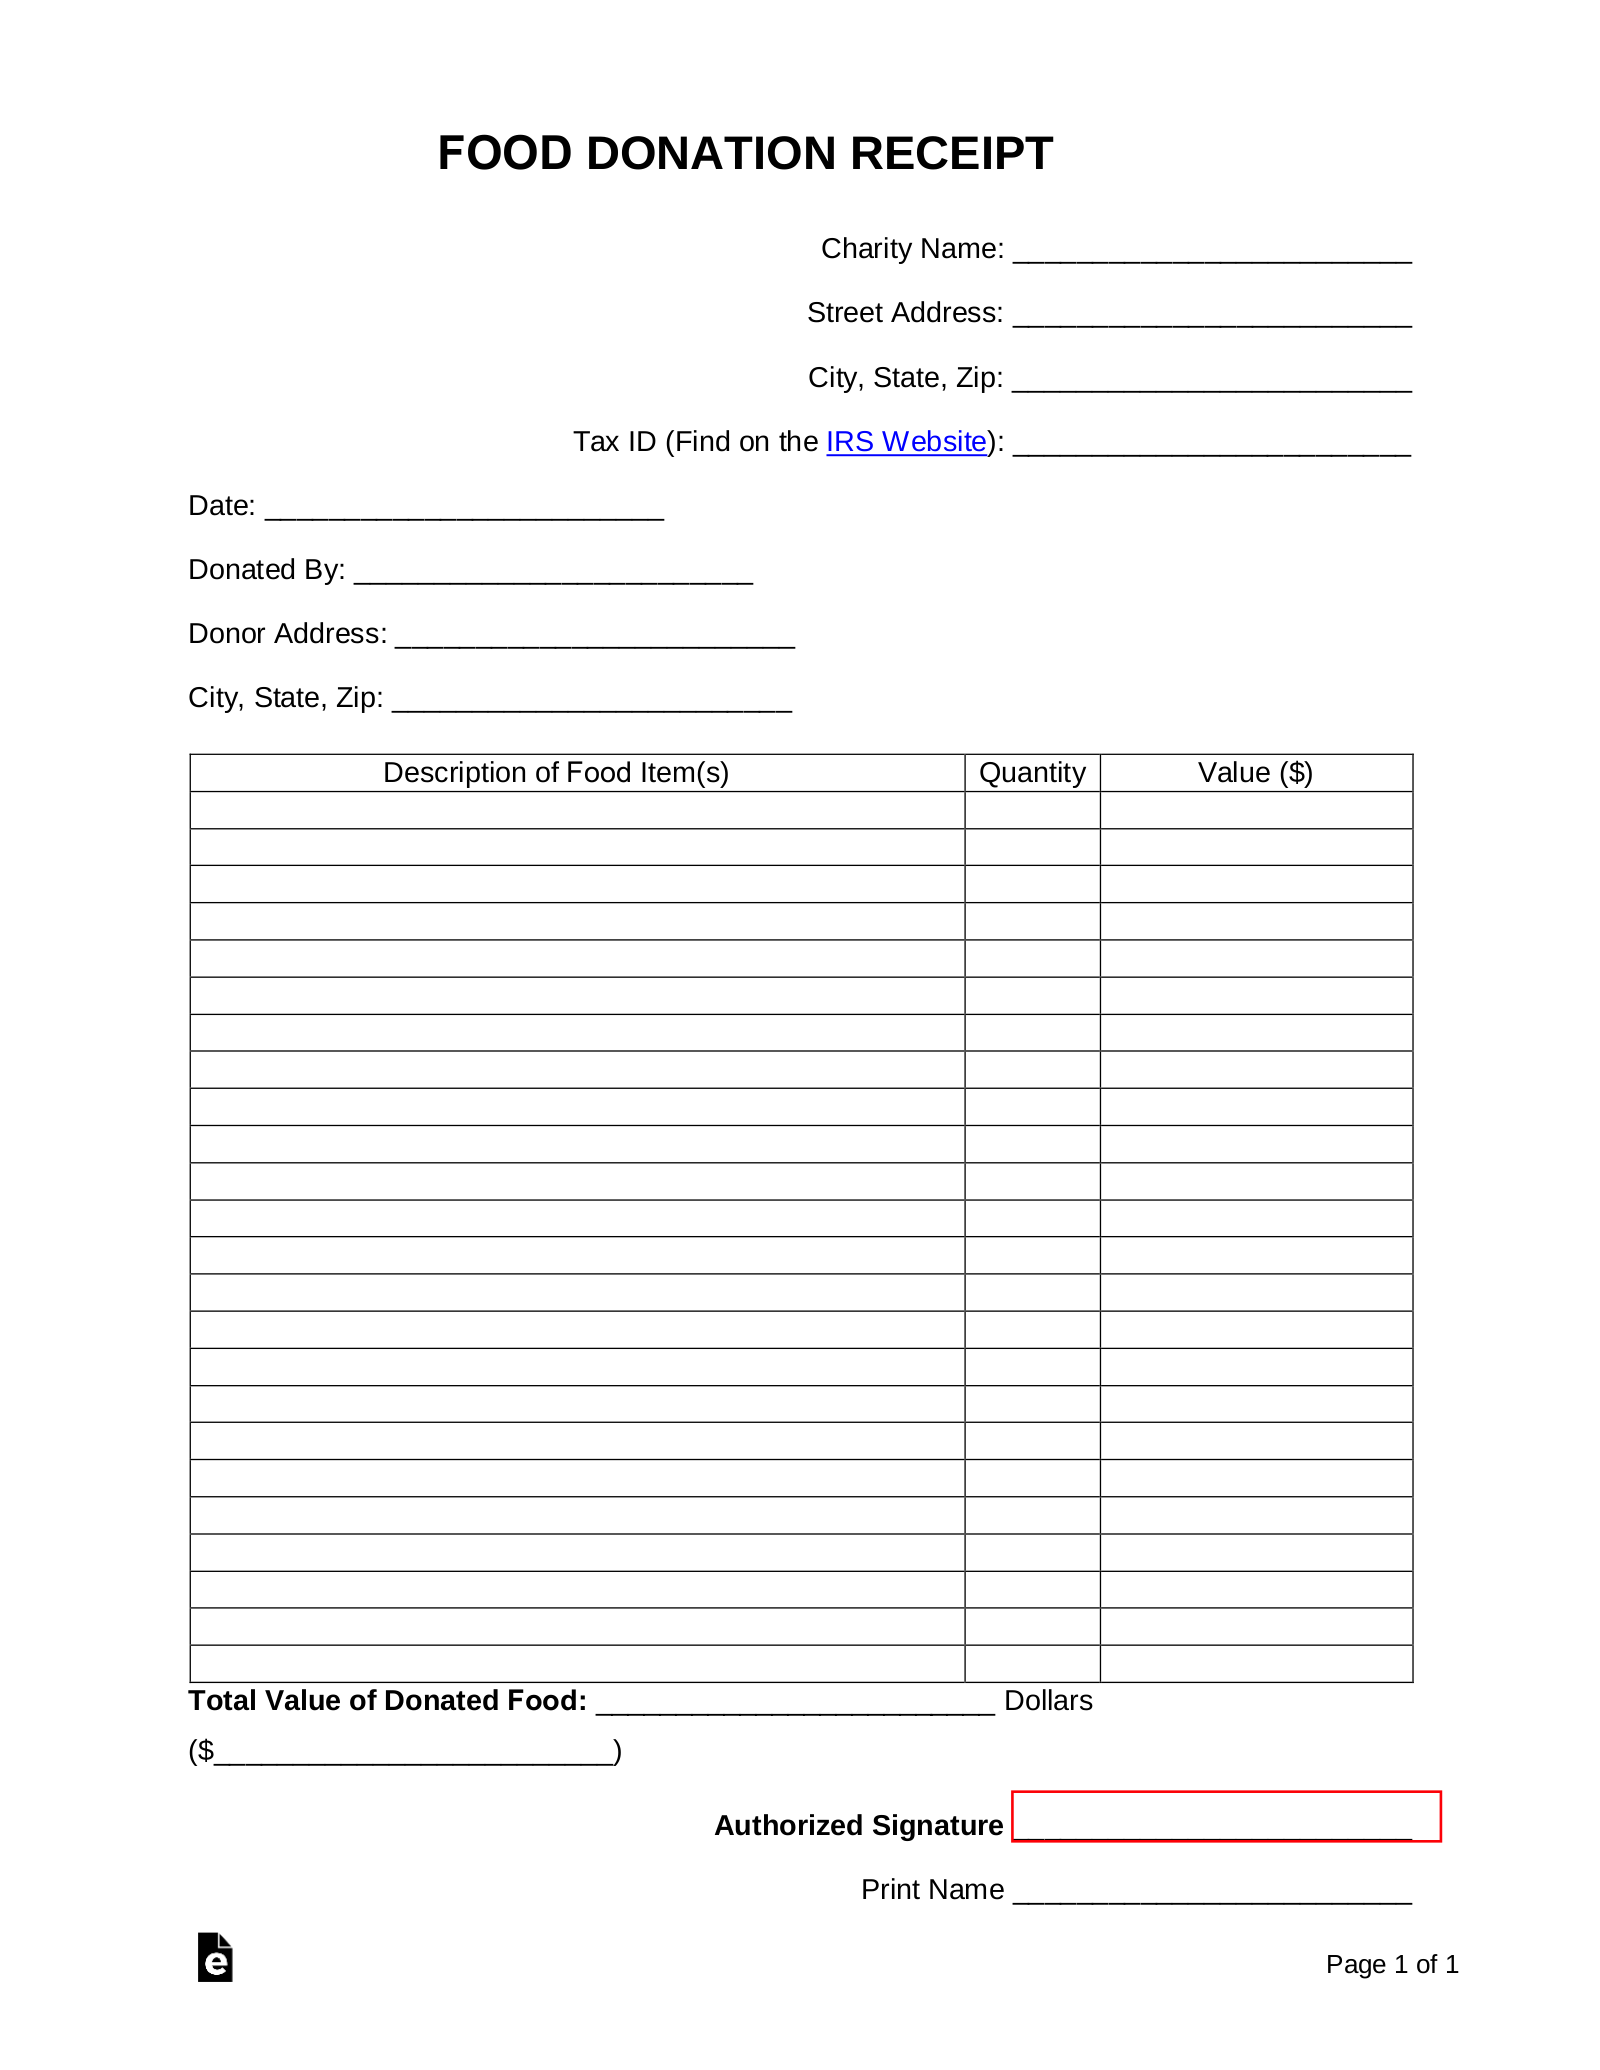 Microsoft word donation receipt template - paneldax